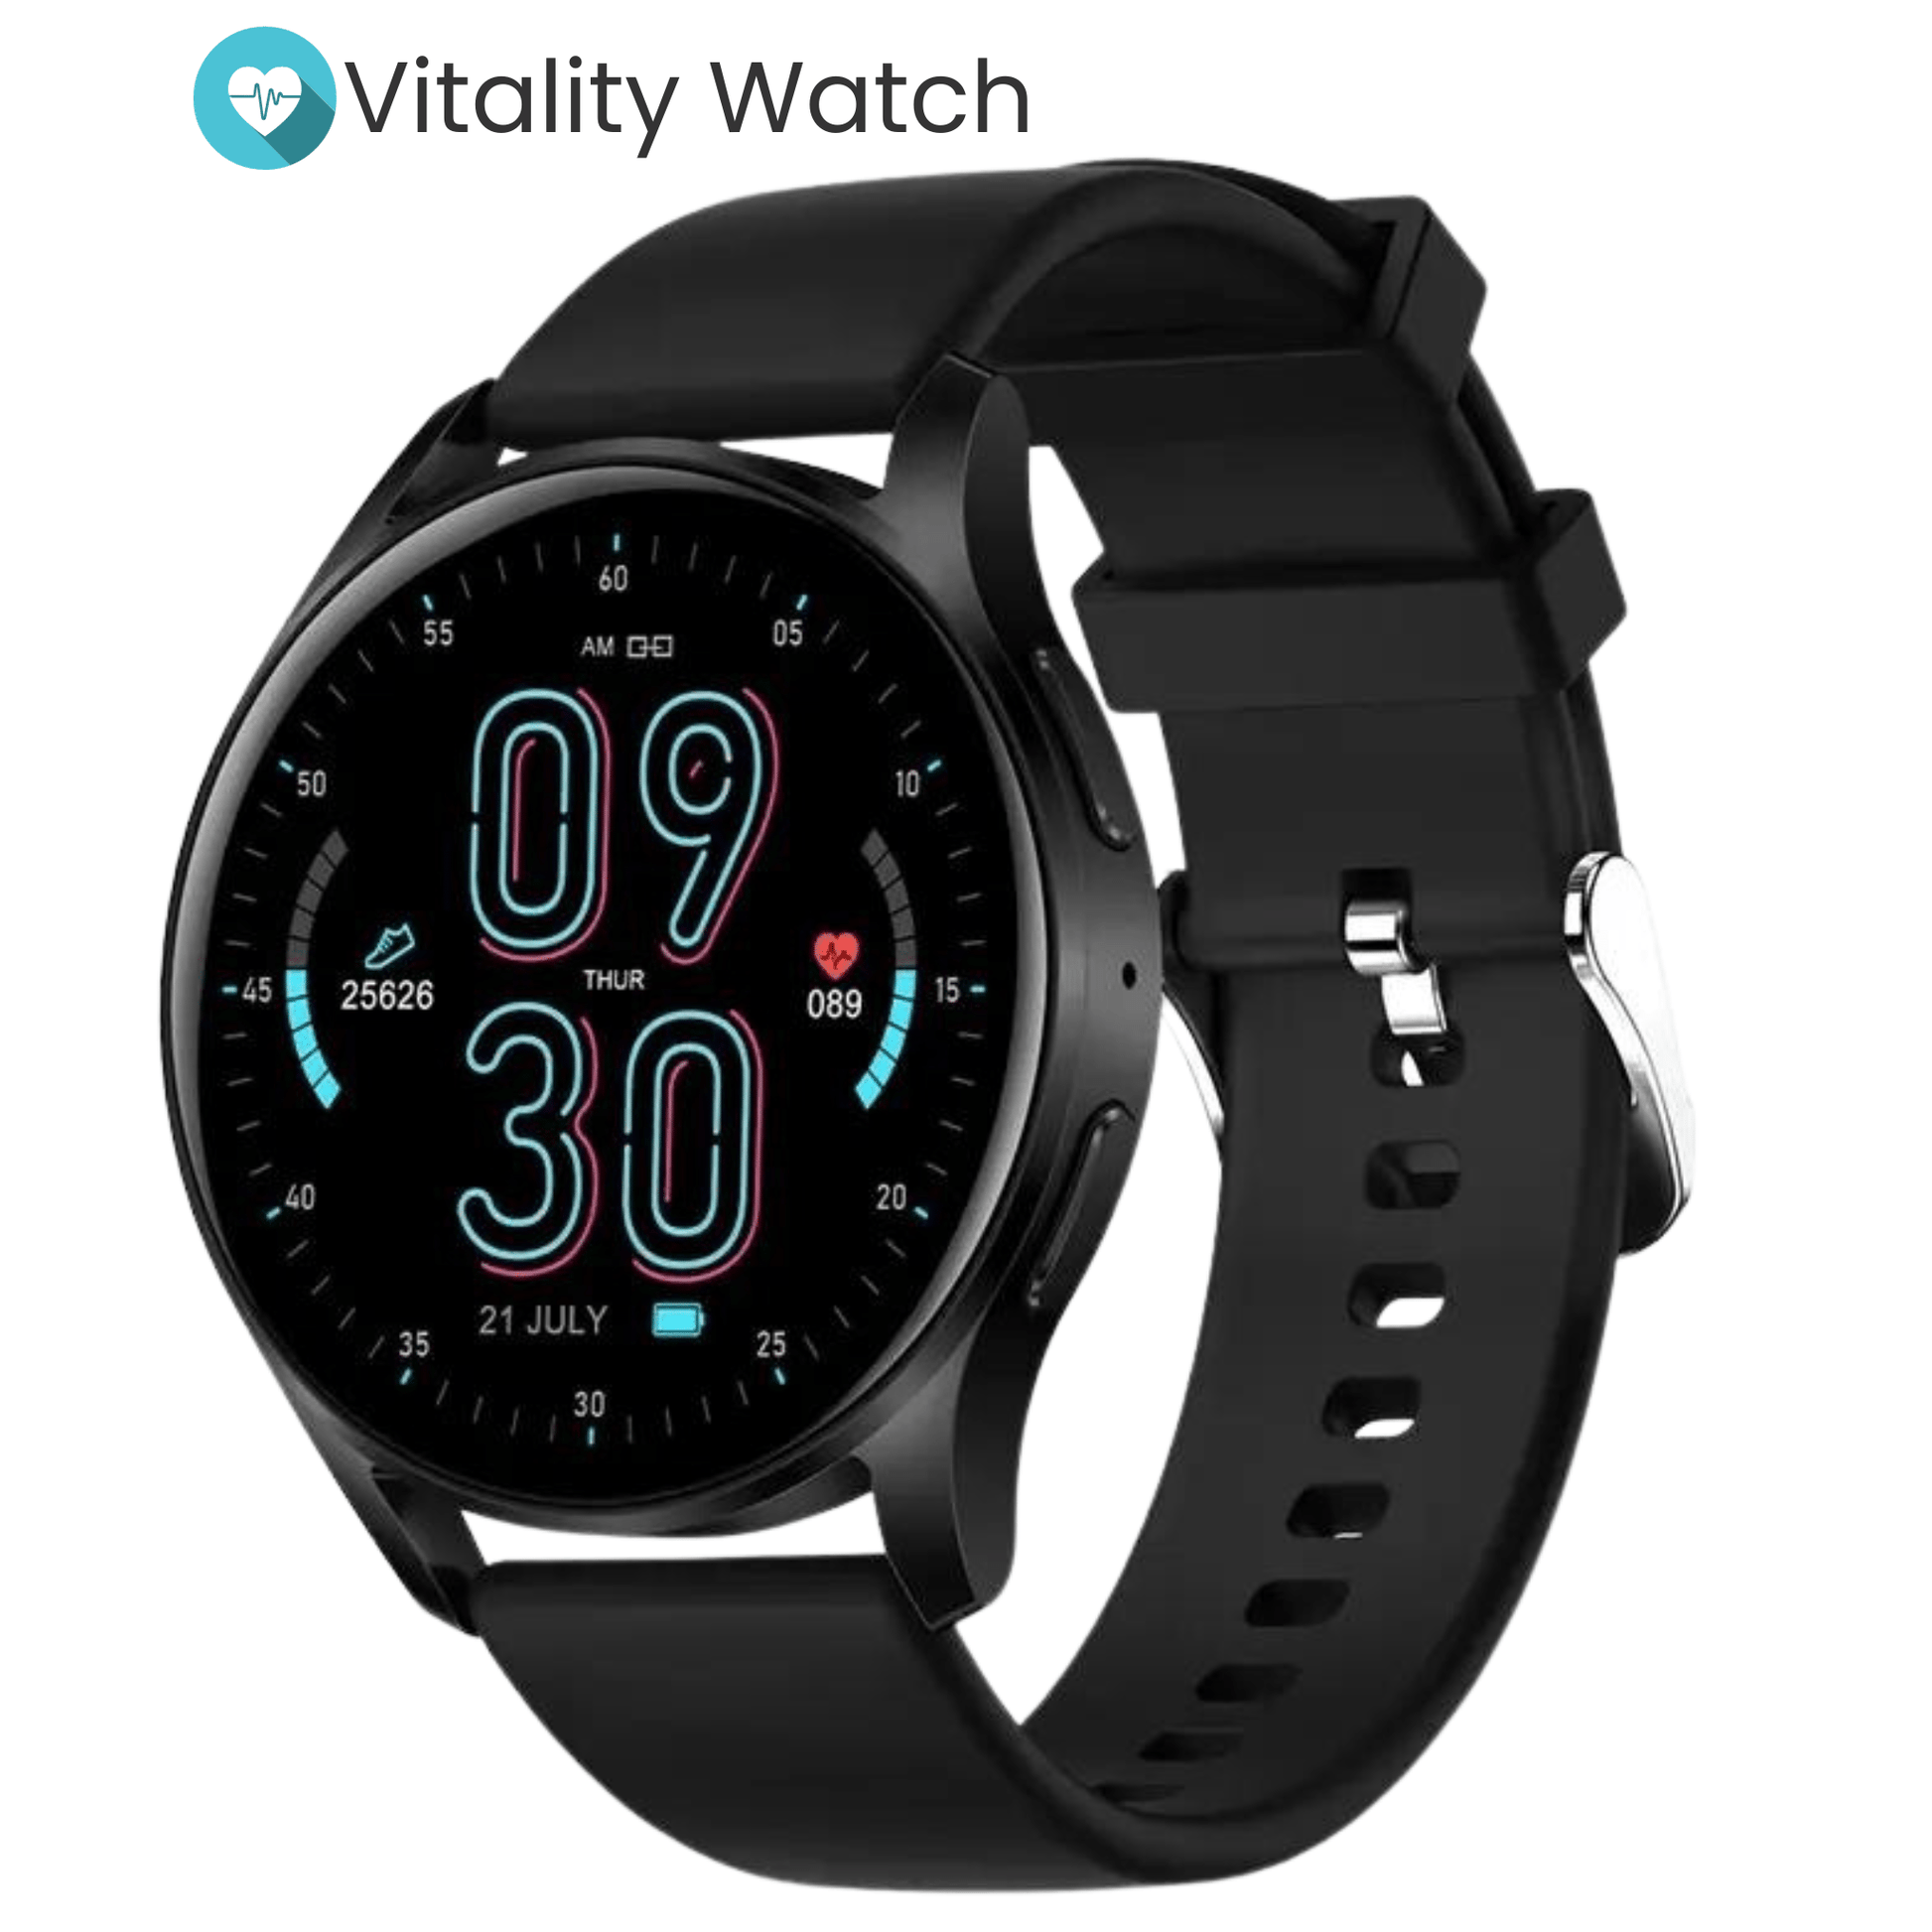 Vitality Watch - Smart BodyWise